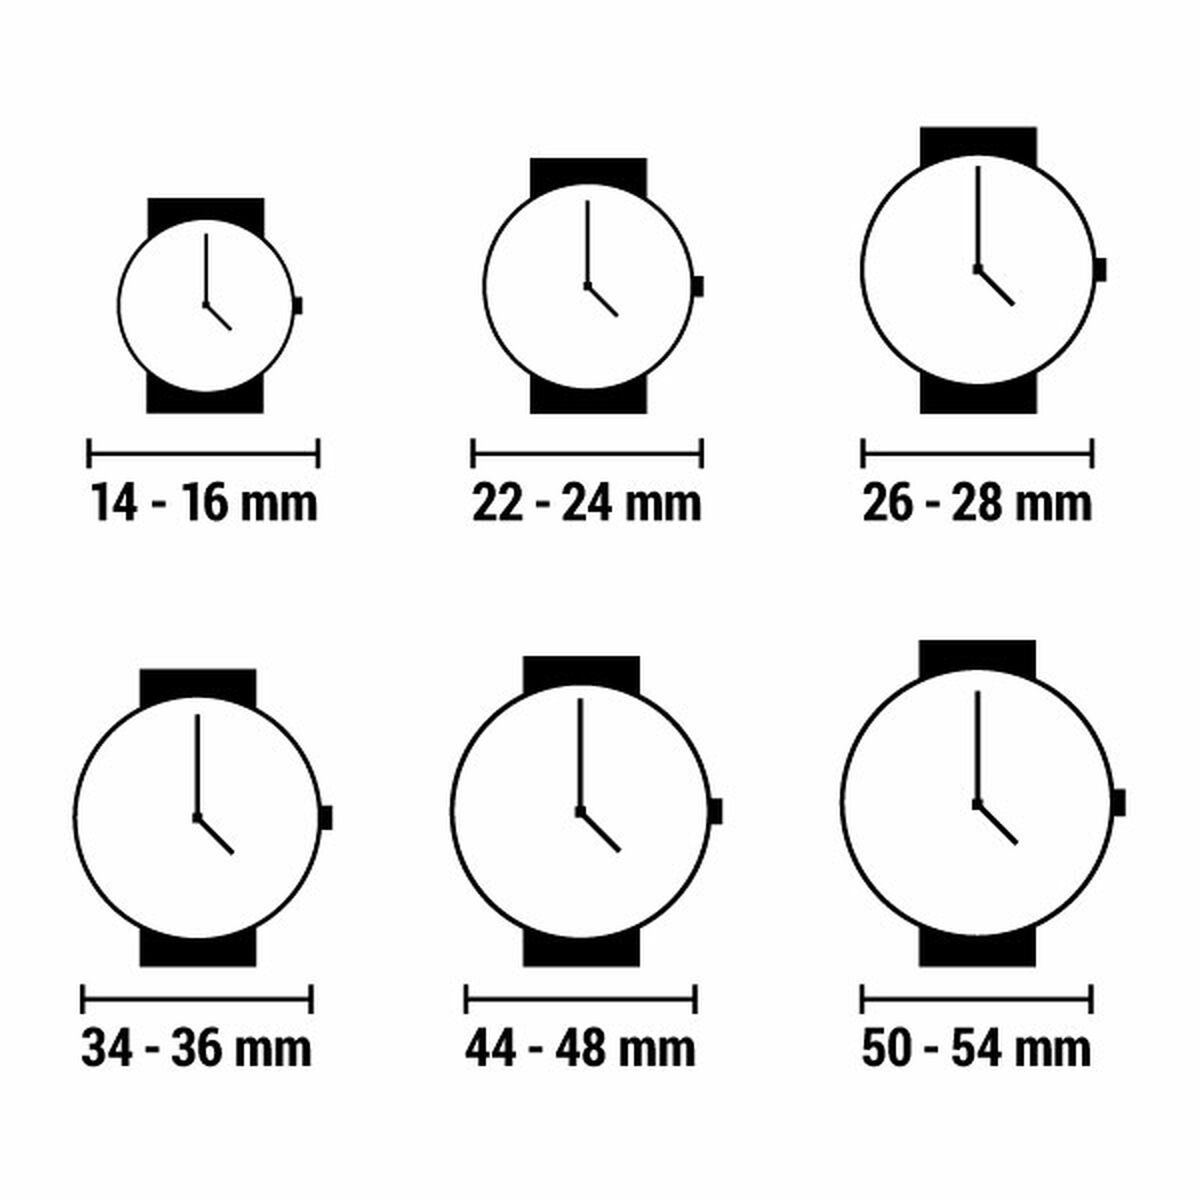 Horloge Dames Swatch GP166